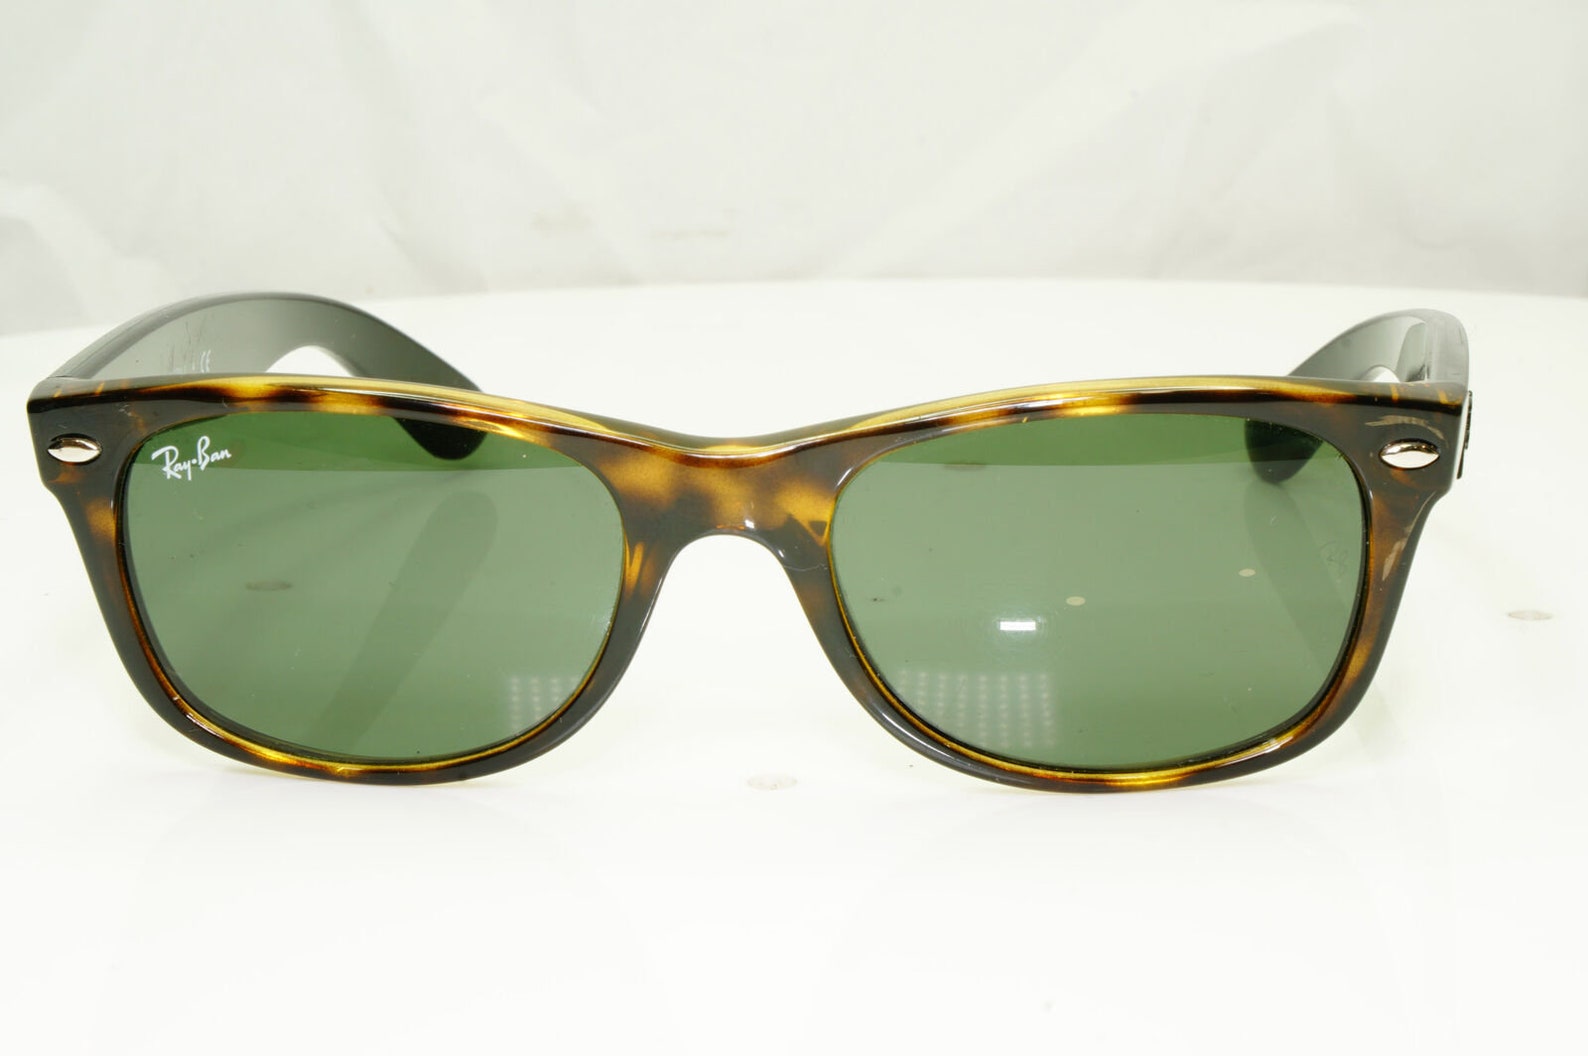 Authentic RayBan Vintage Sunglasses Rb 2132 New Wayfarer